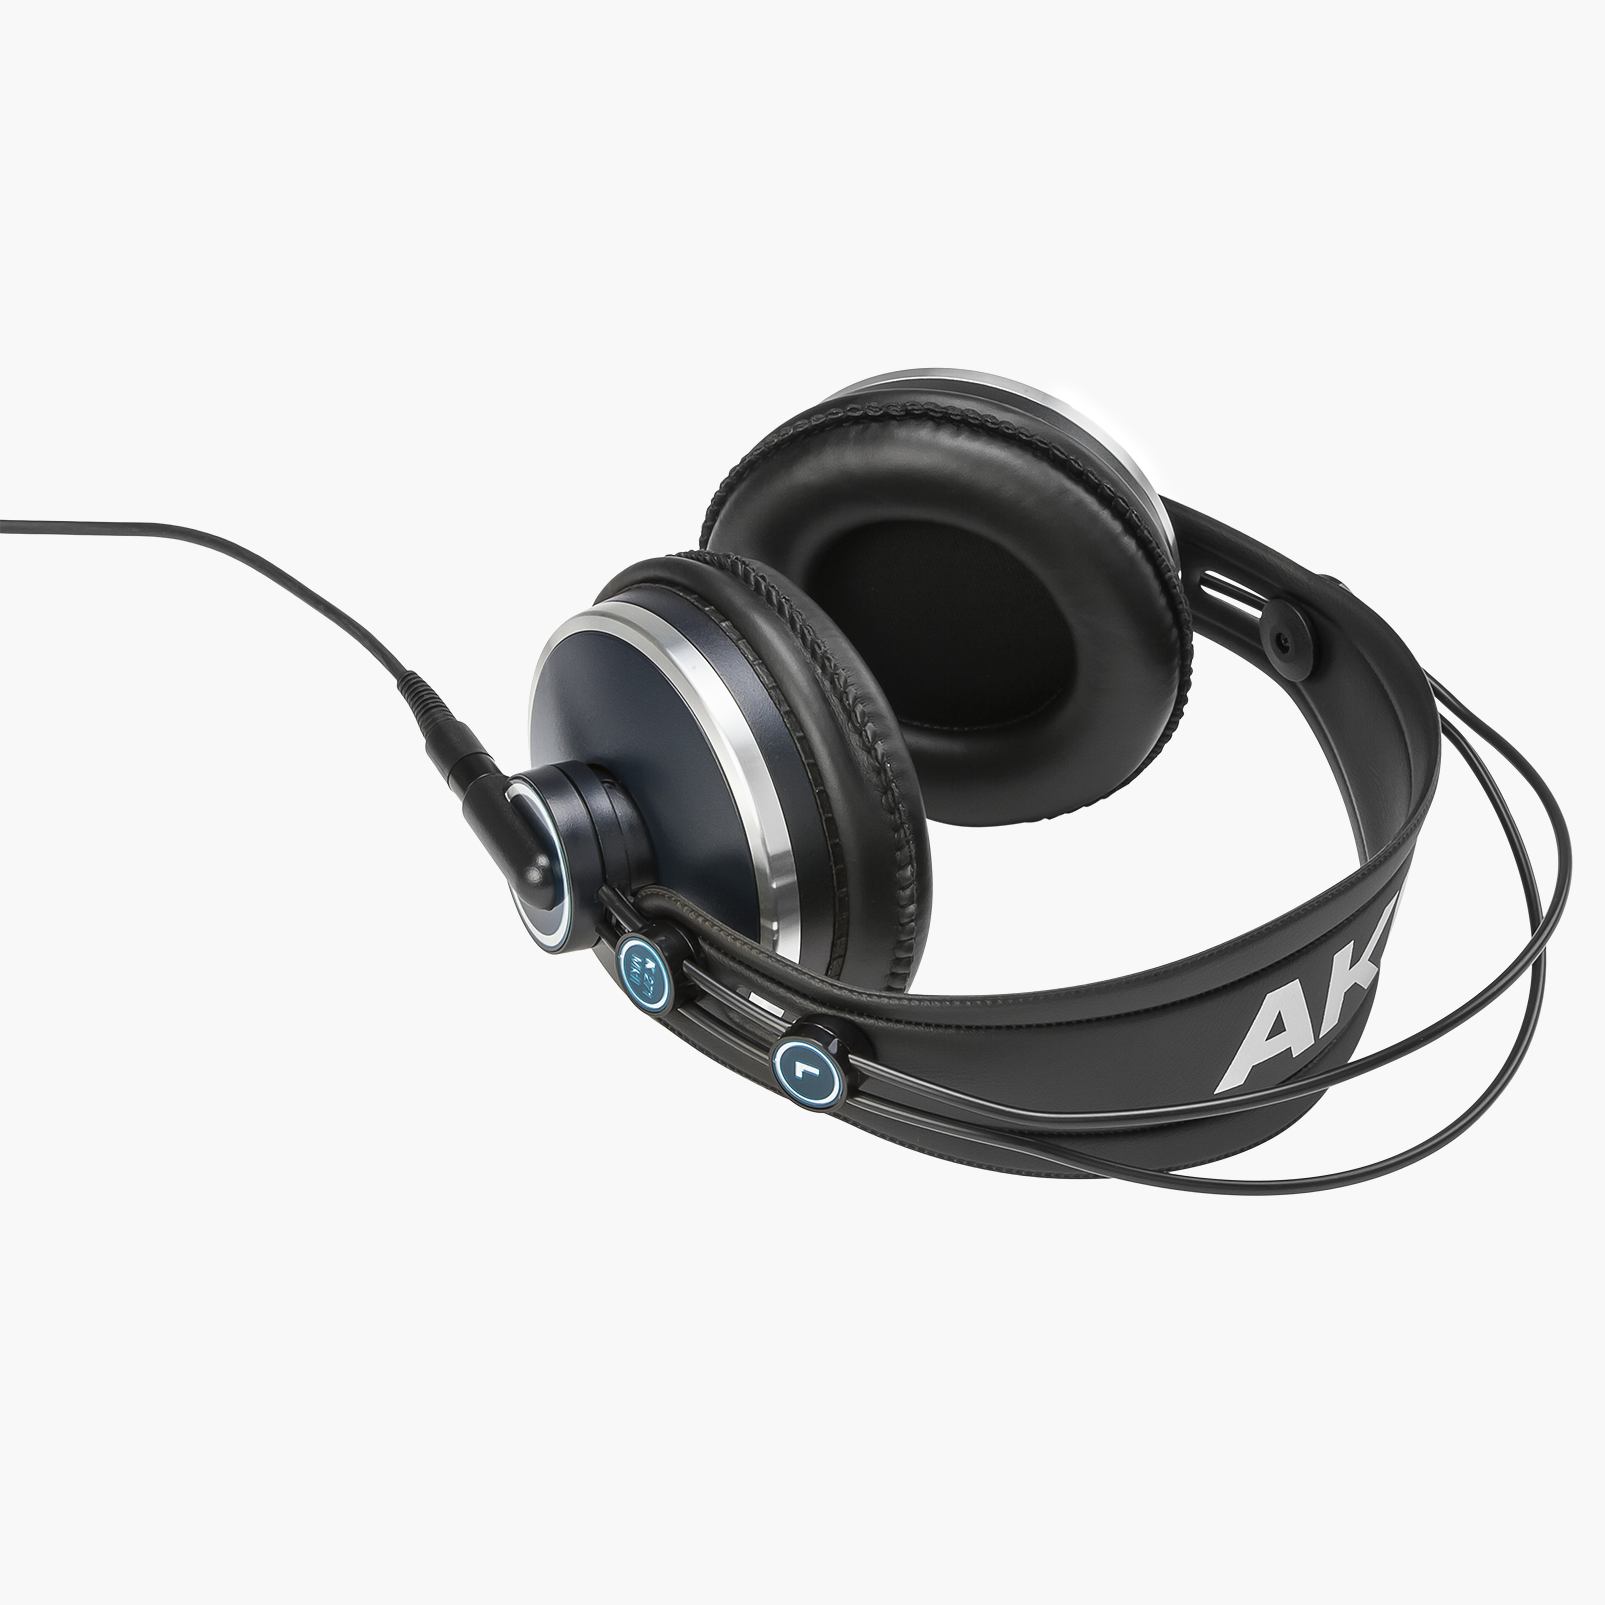 K271 MKII (B-Stock) - Black - Professional studio headphones - Detailshot 2